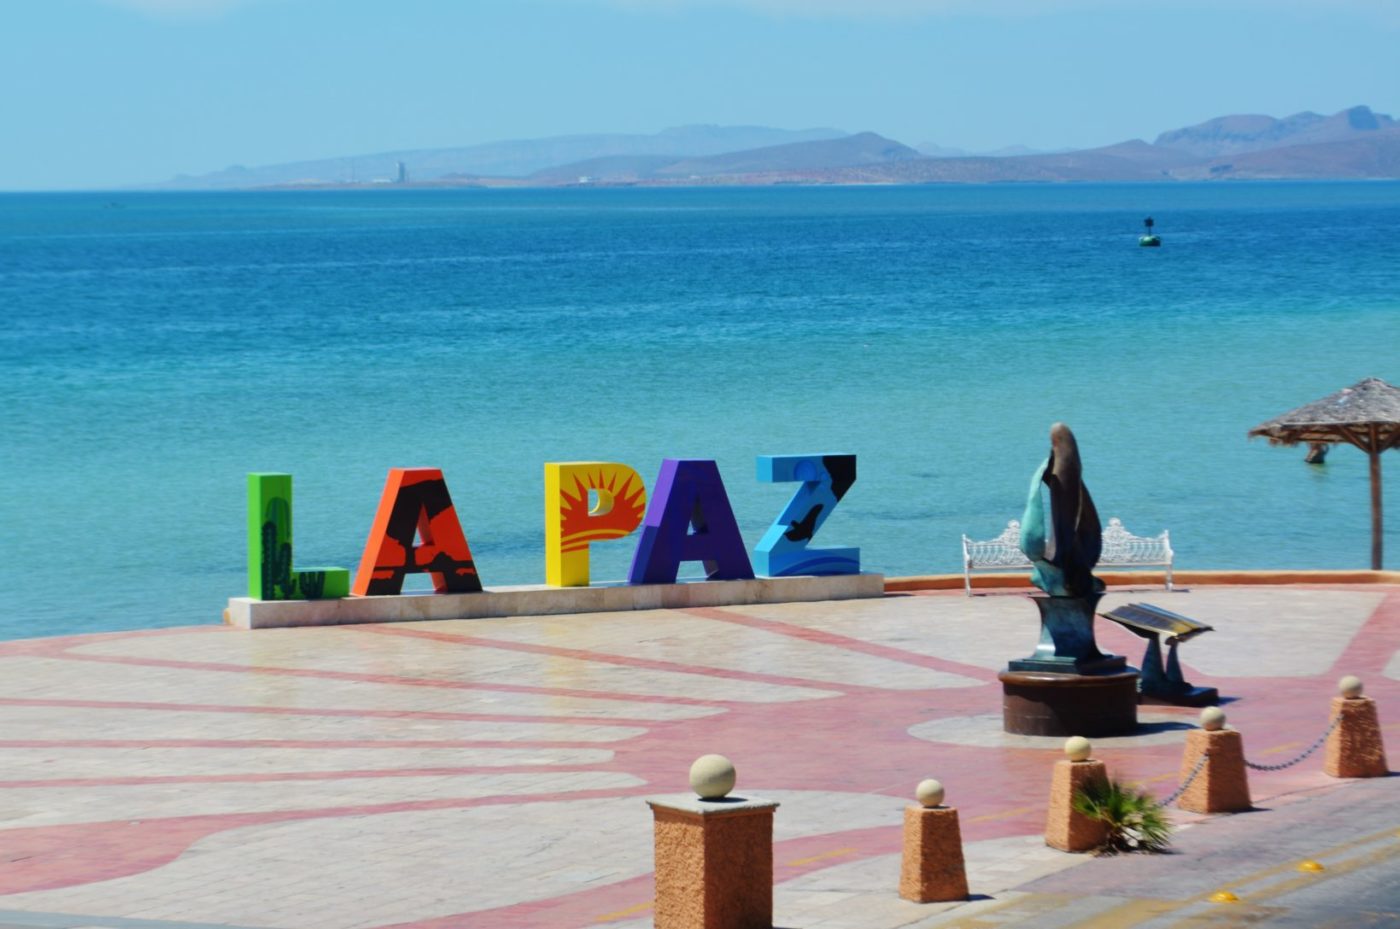 The Port of La Paz, Mexico